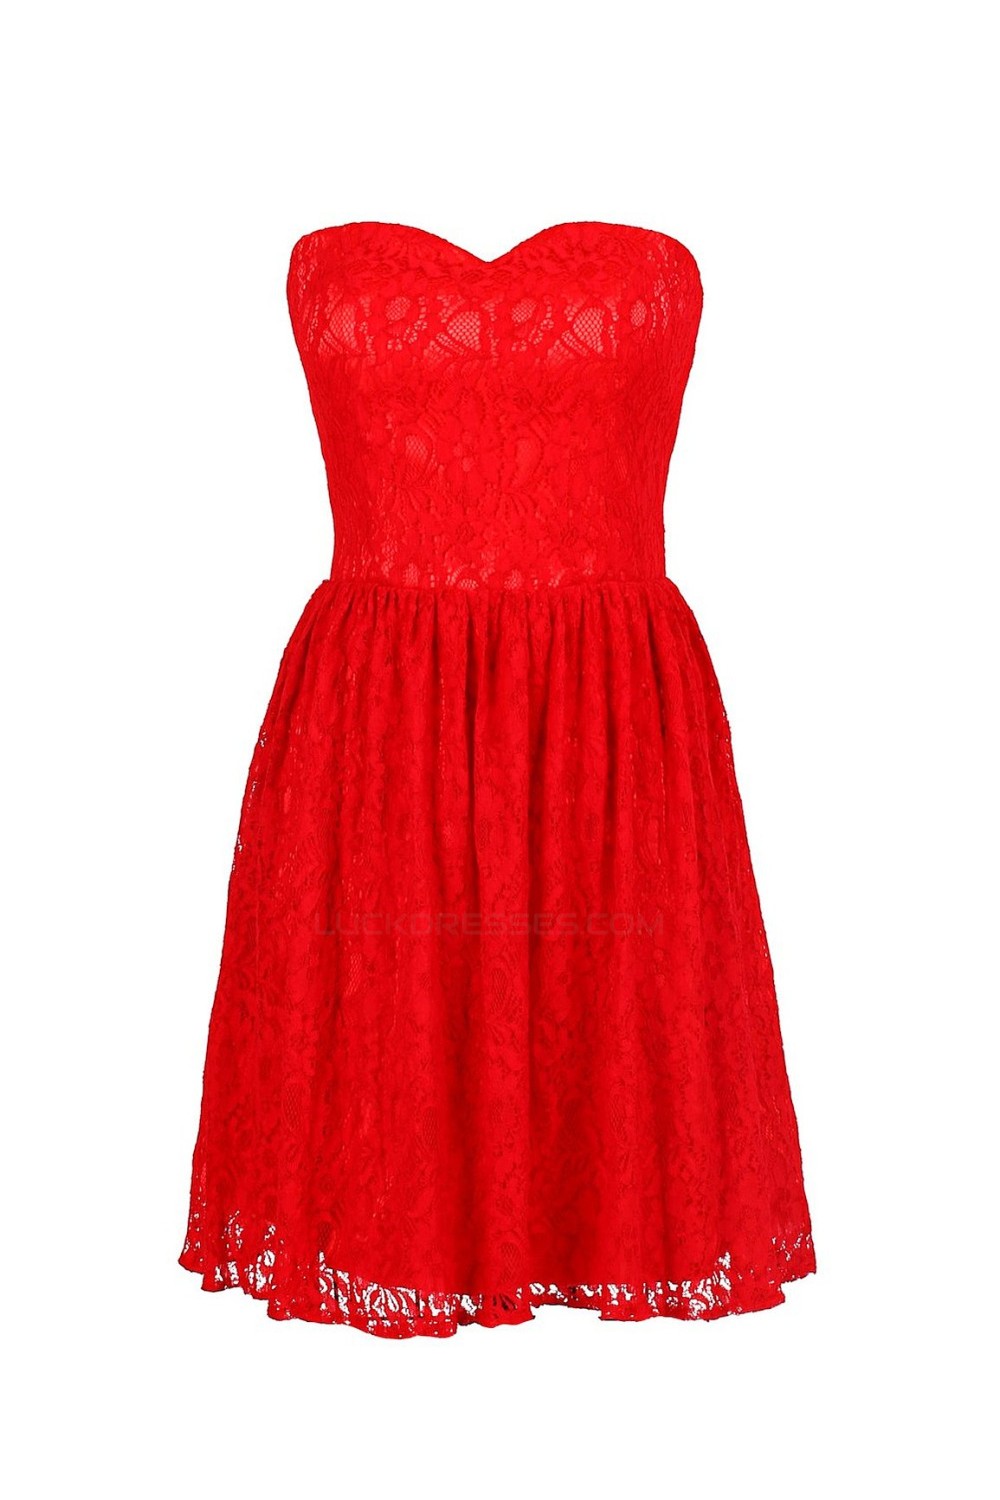 short red bridesmaid dresses